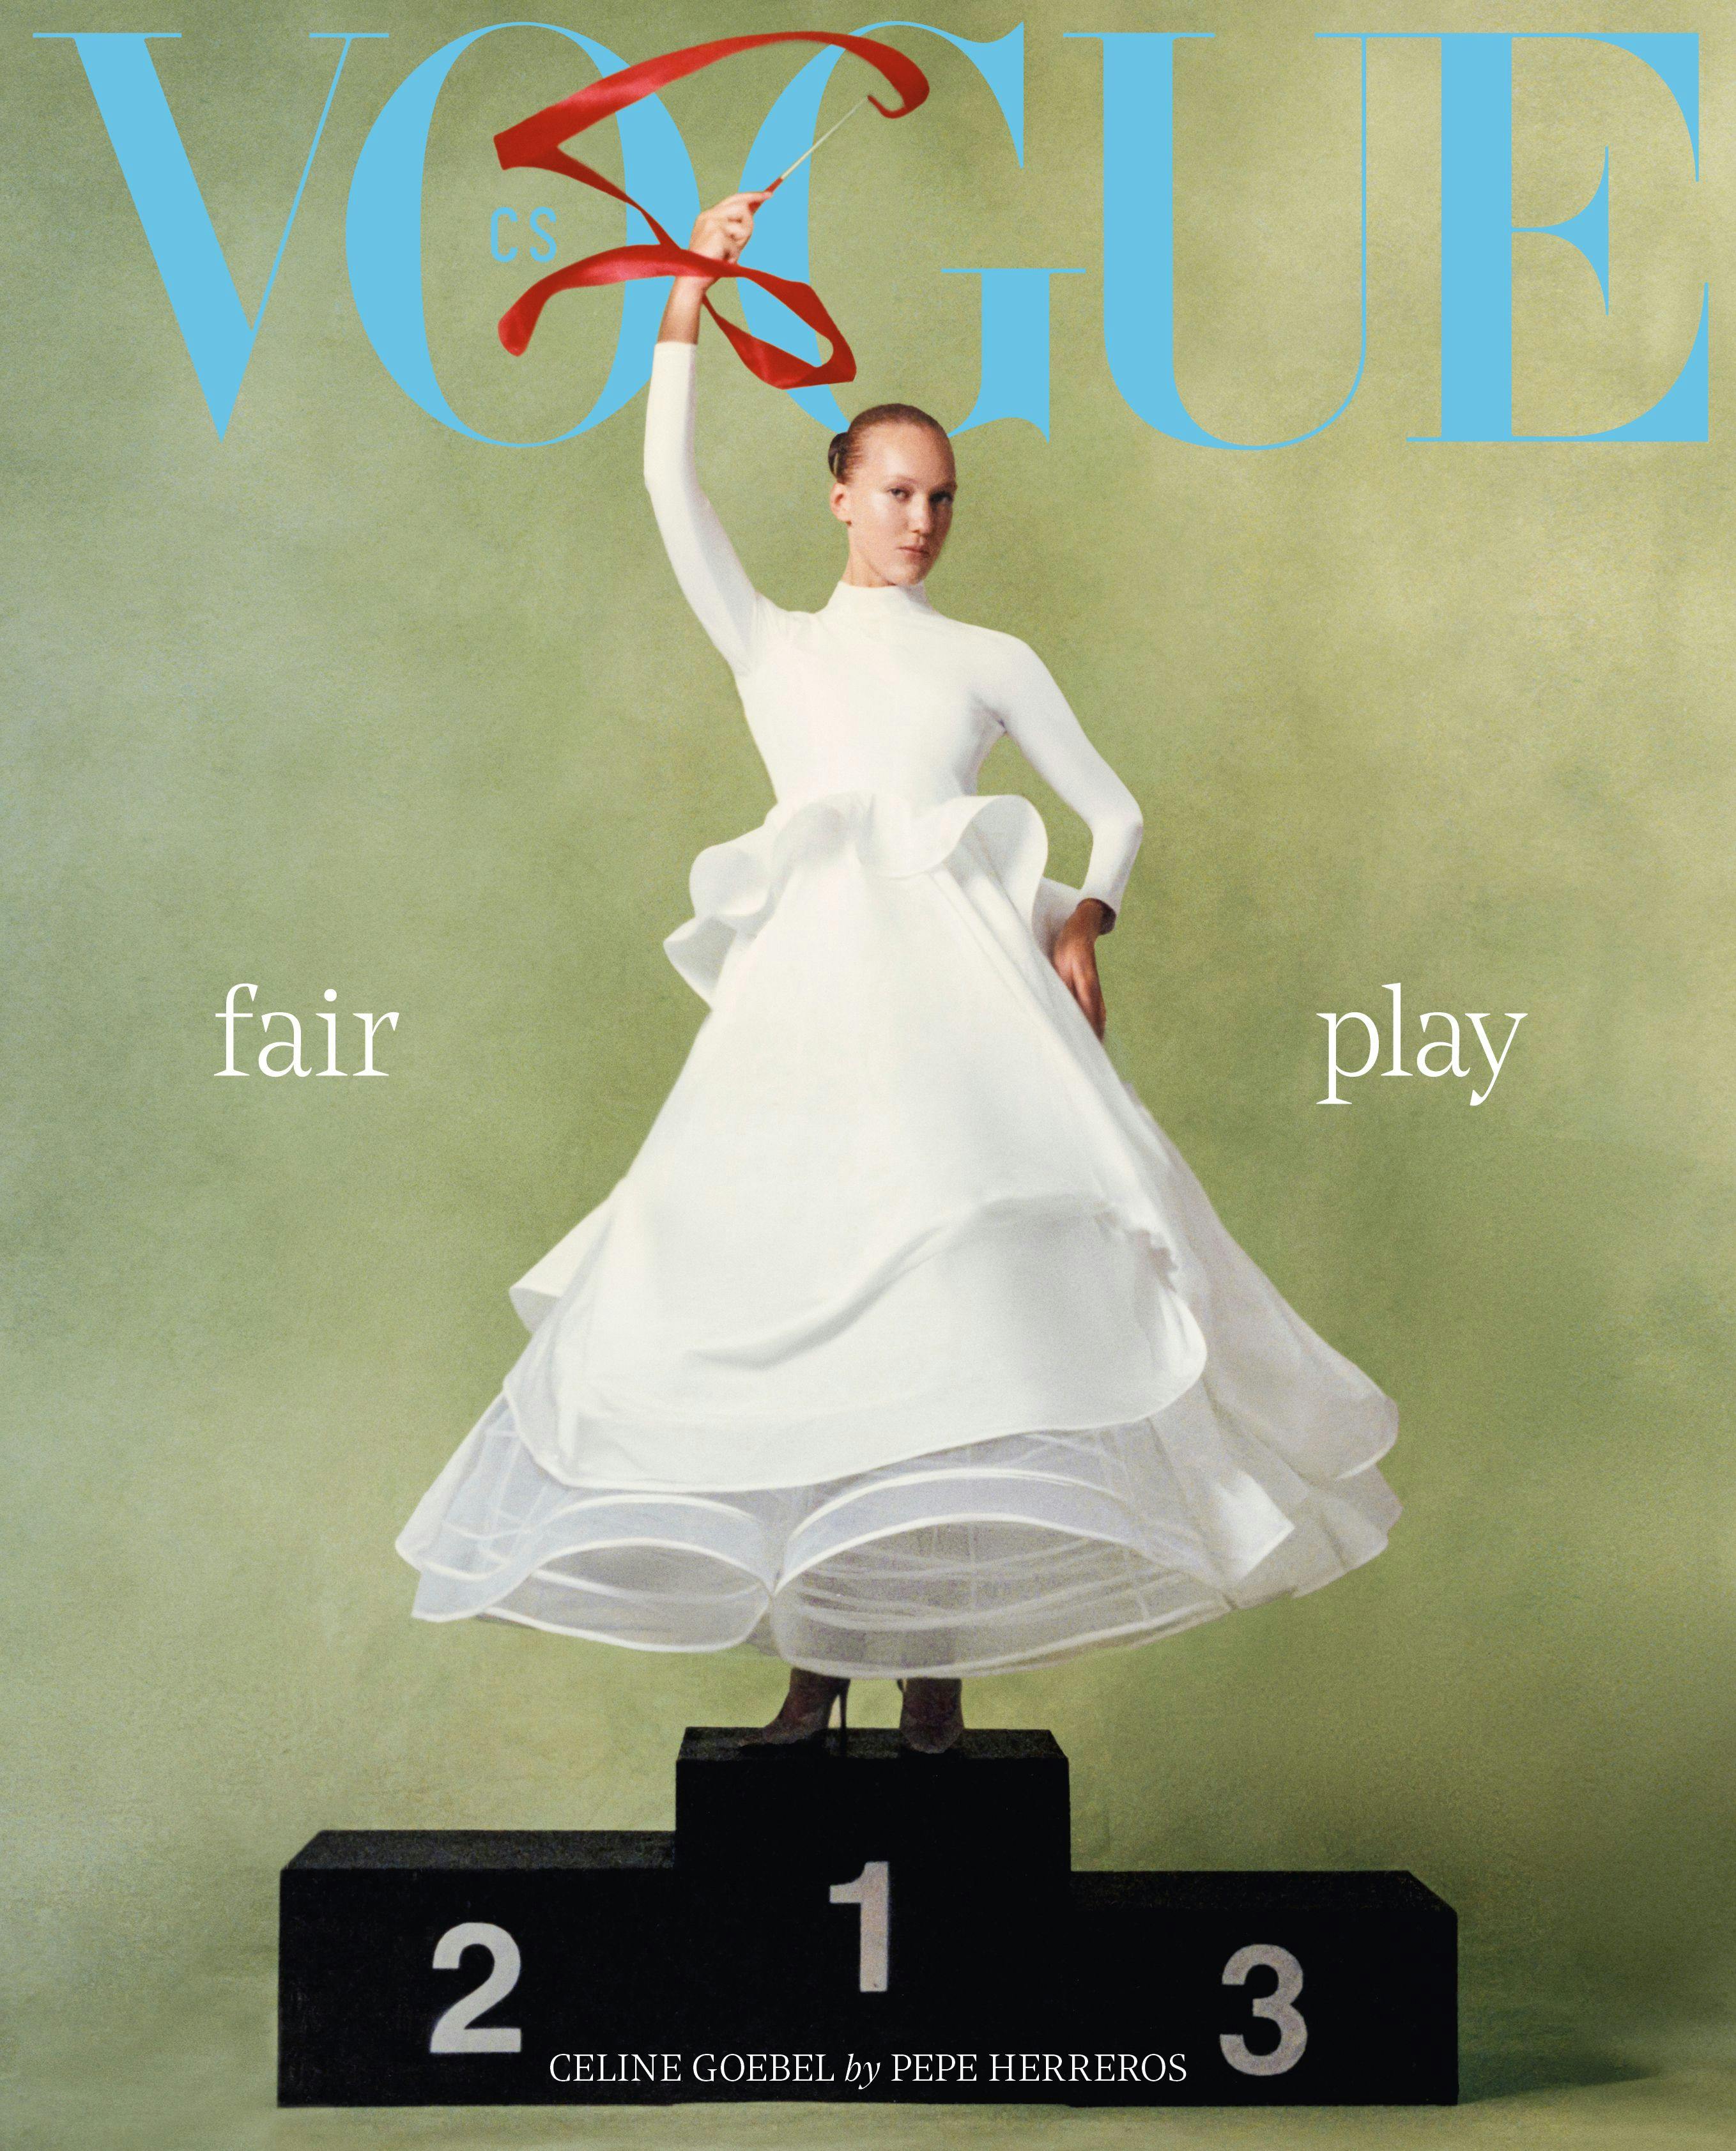 Vogue Czech by Pepe Herreros & Martxel Montero